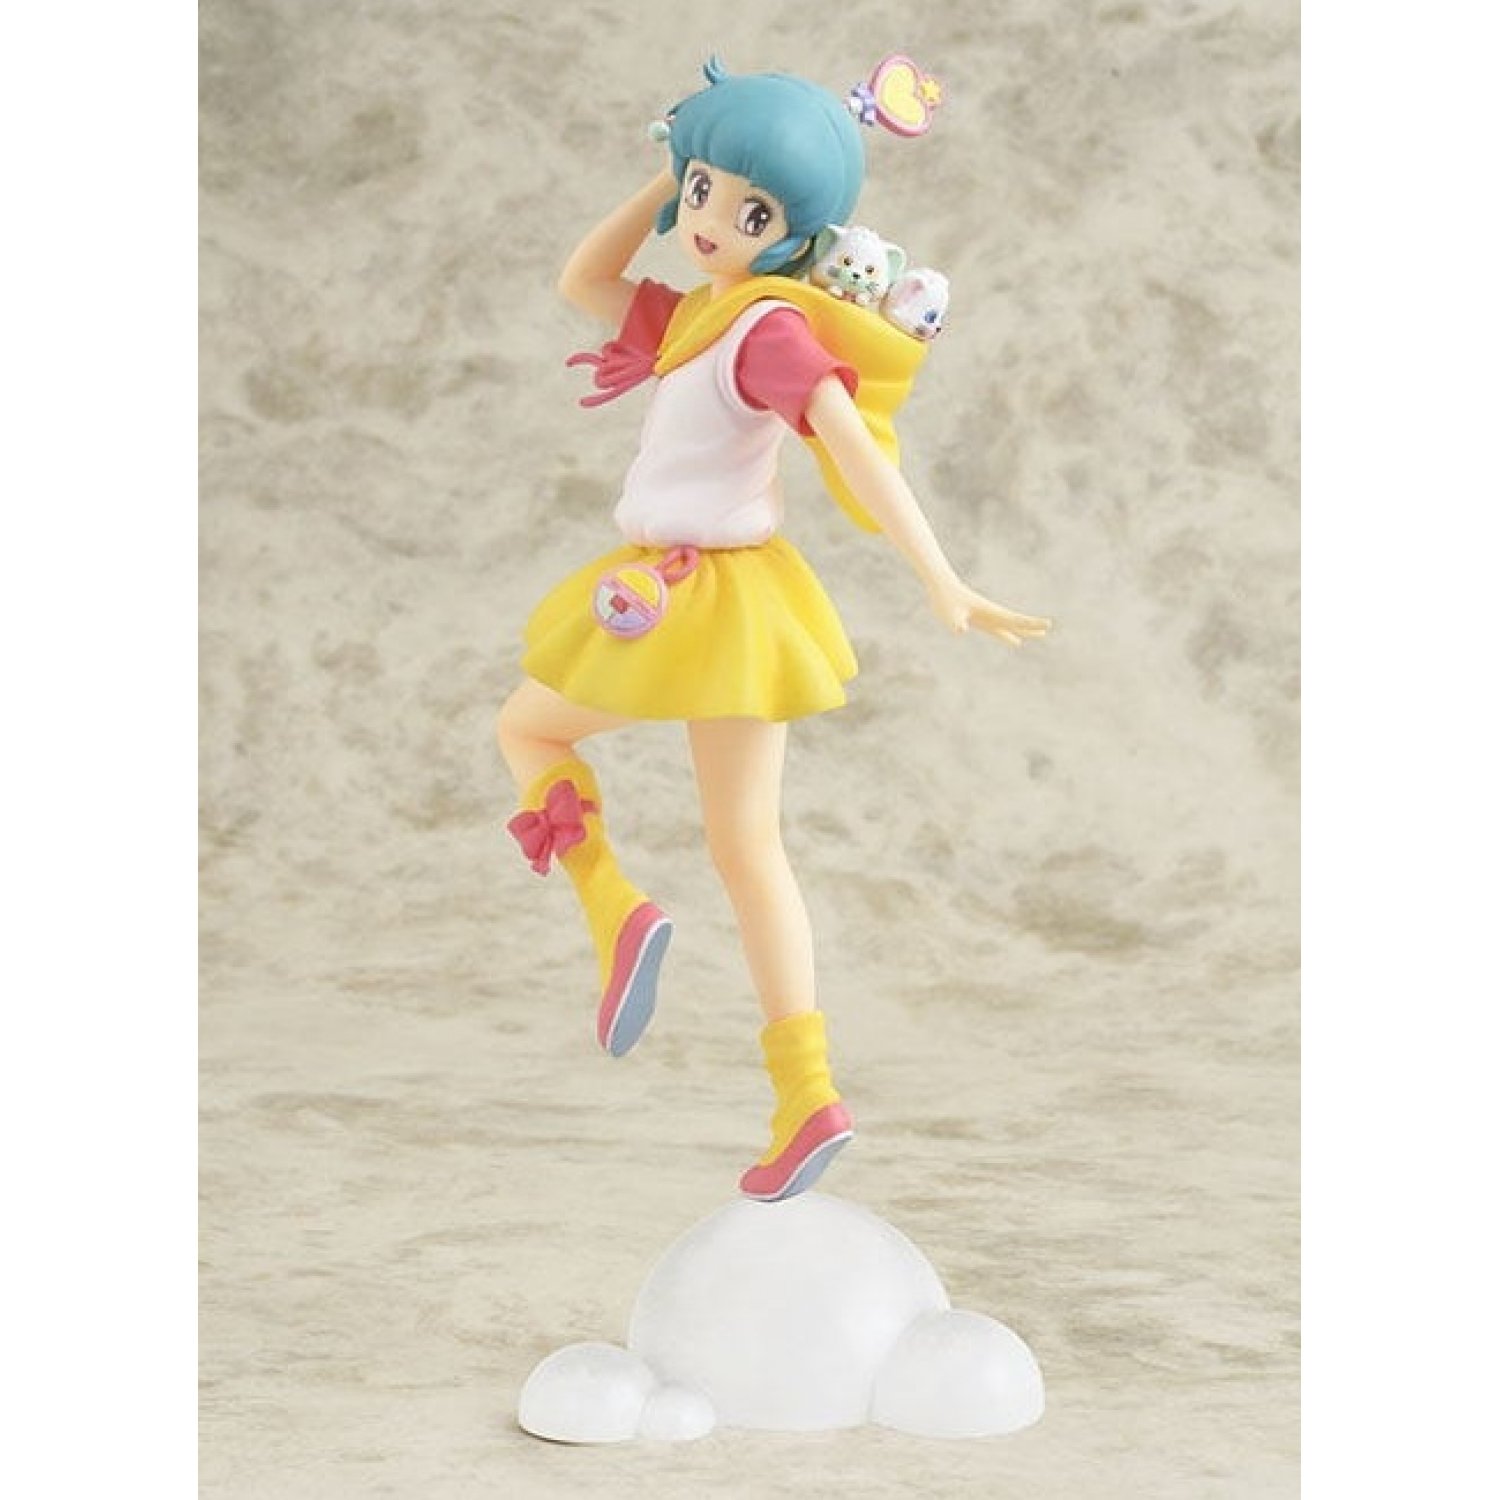 Creamy Mami: The Magic Angel Gutto kuru Figure Collection La beaute ...